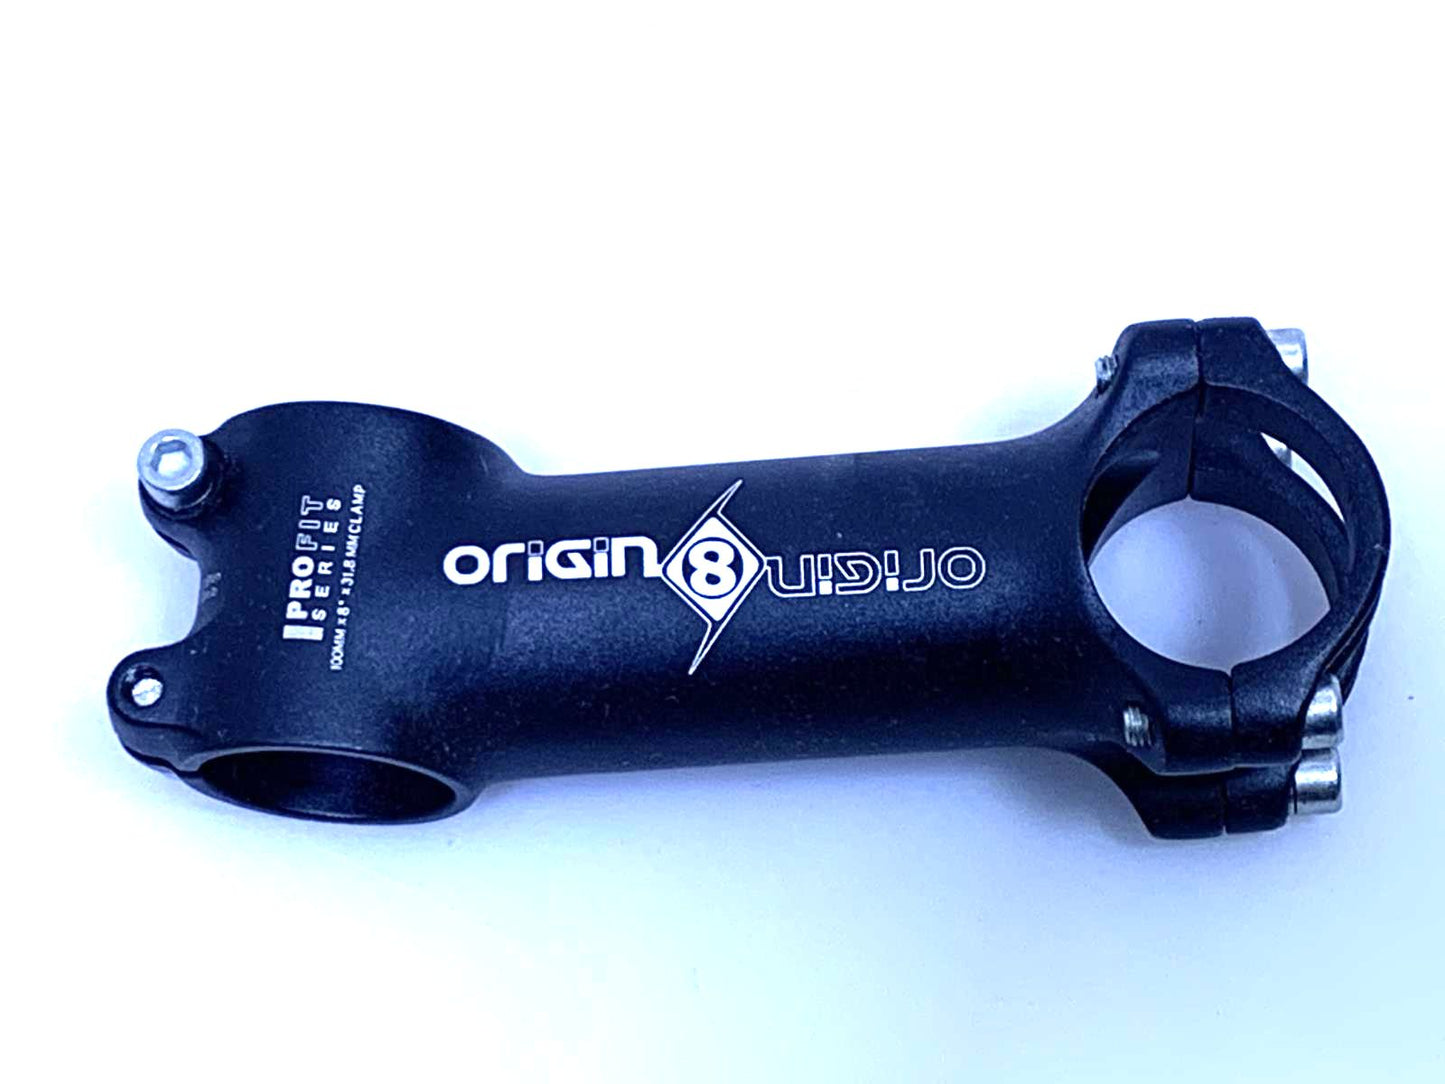 Origin8 Pro-fit 90mm Alloy Ergo Bike Stem 31.8mm 1-1/8" New